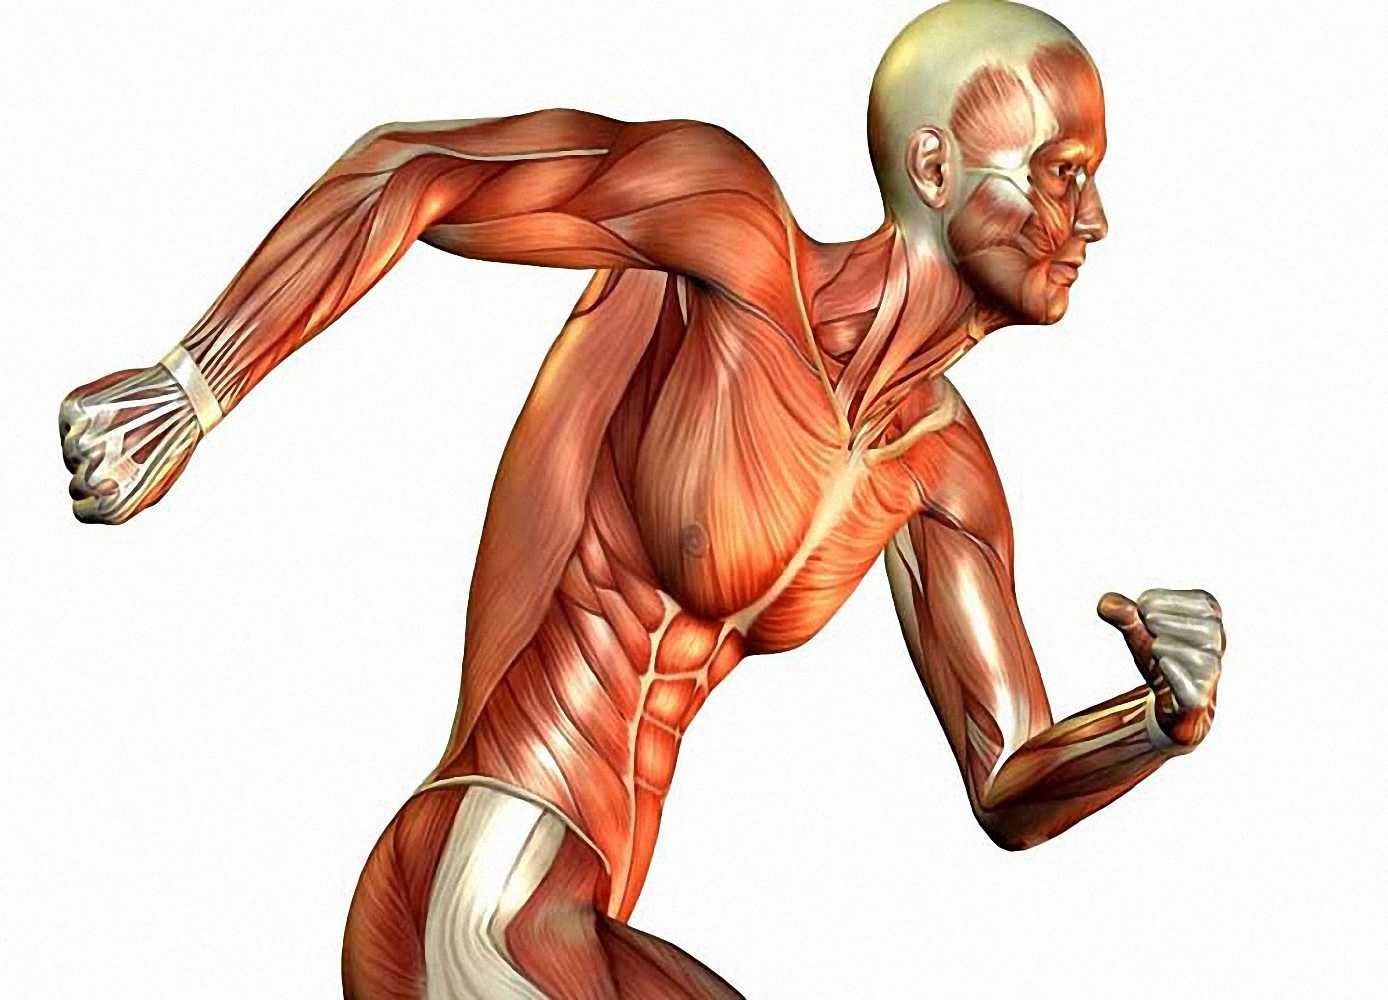 Работа скелетных мышц человека